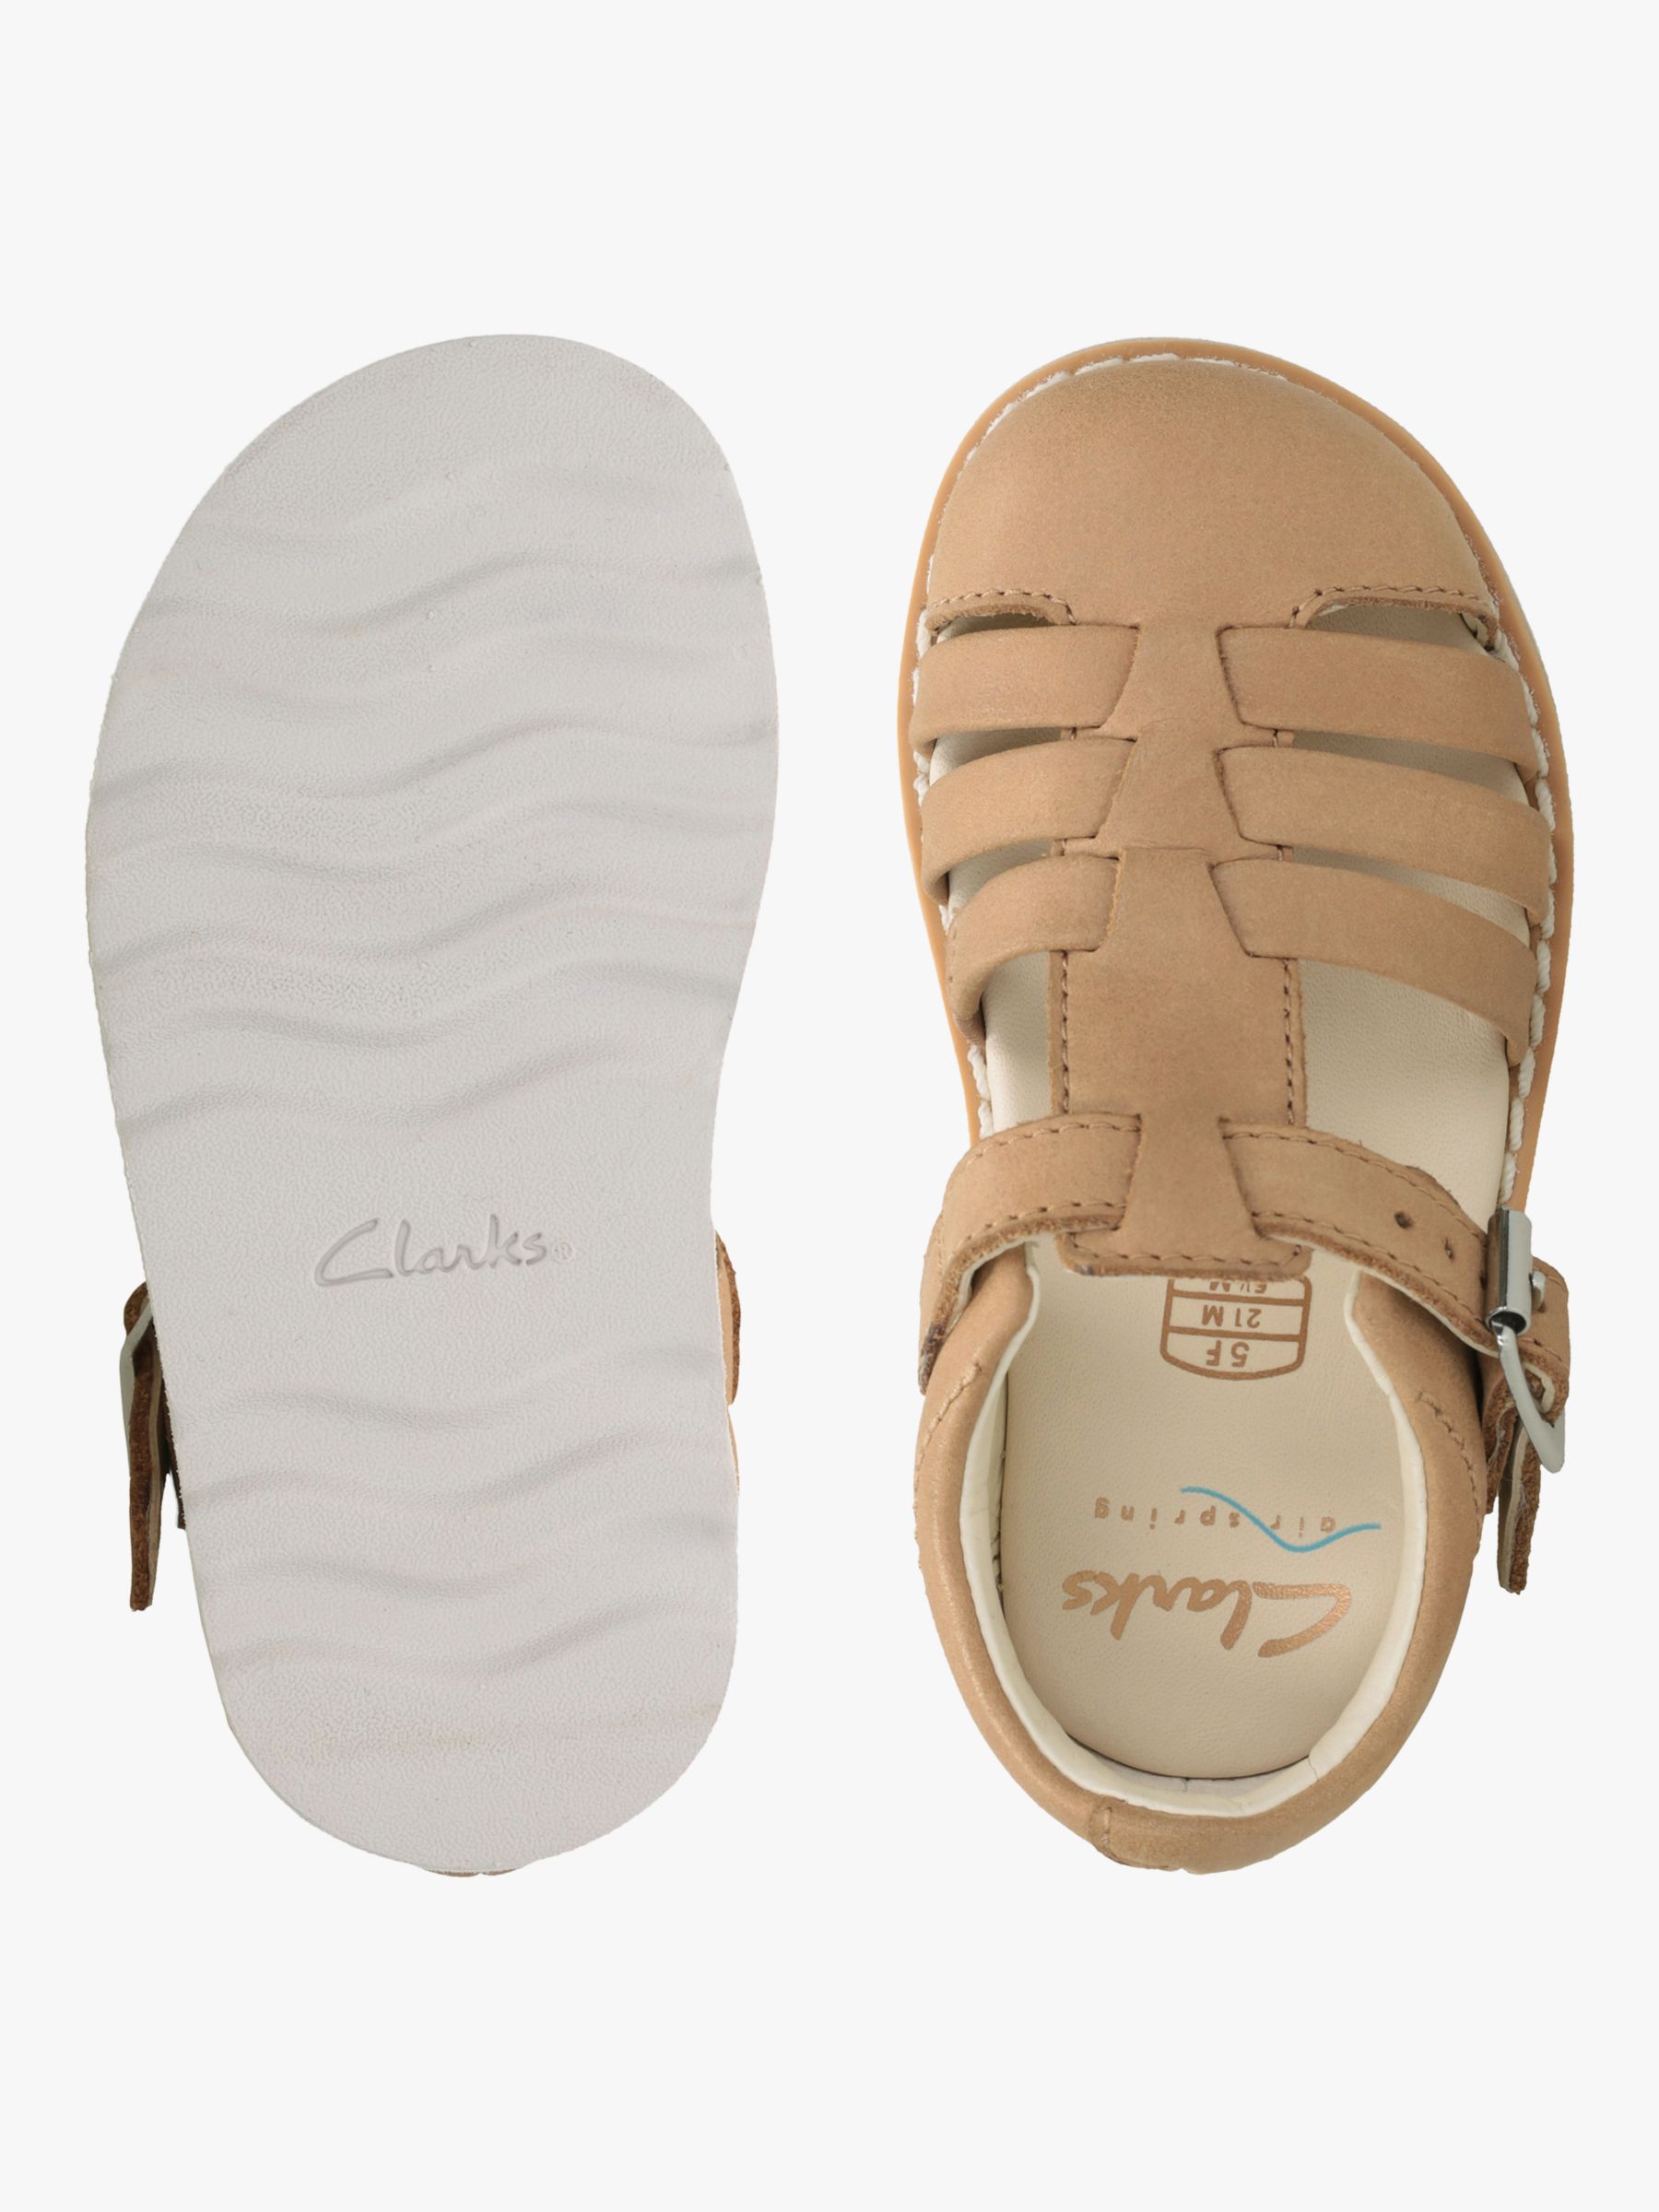 clarks crown stem sandals